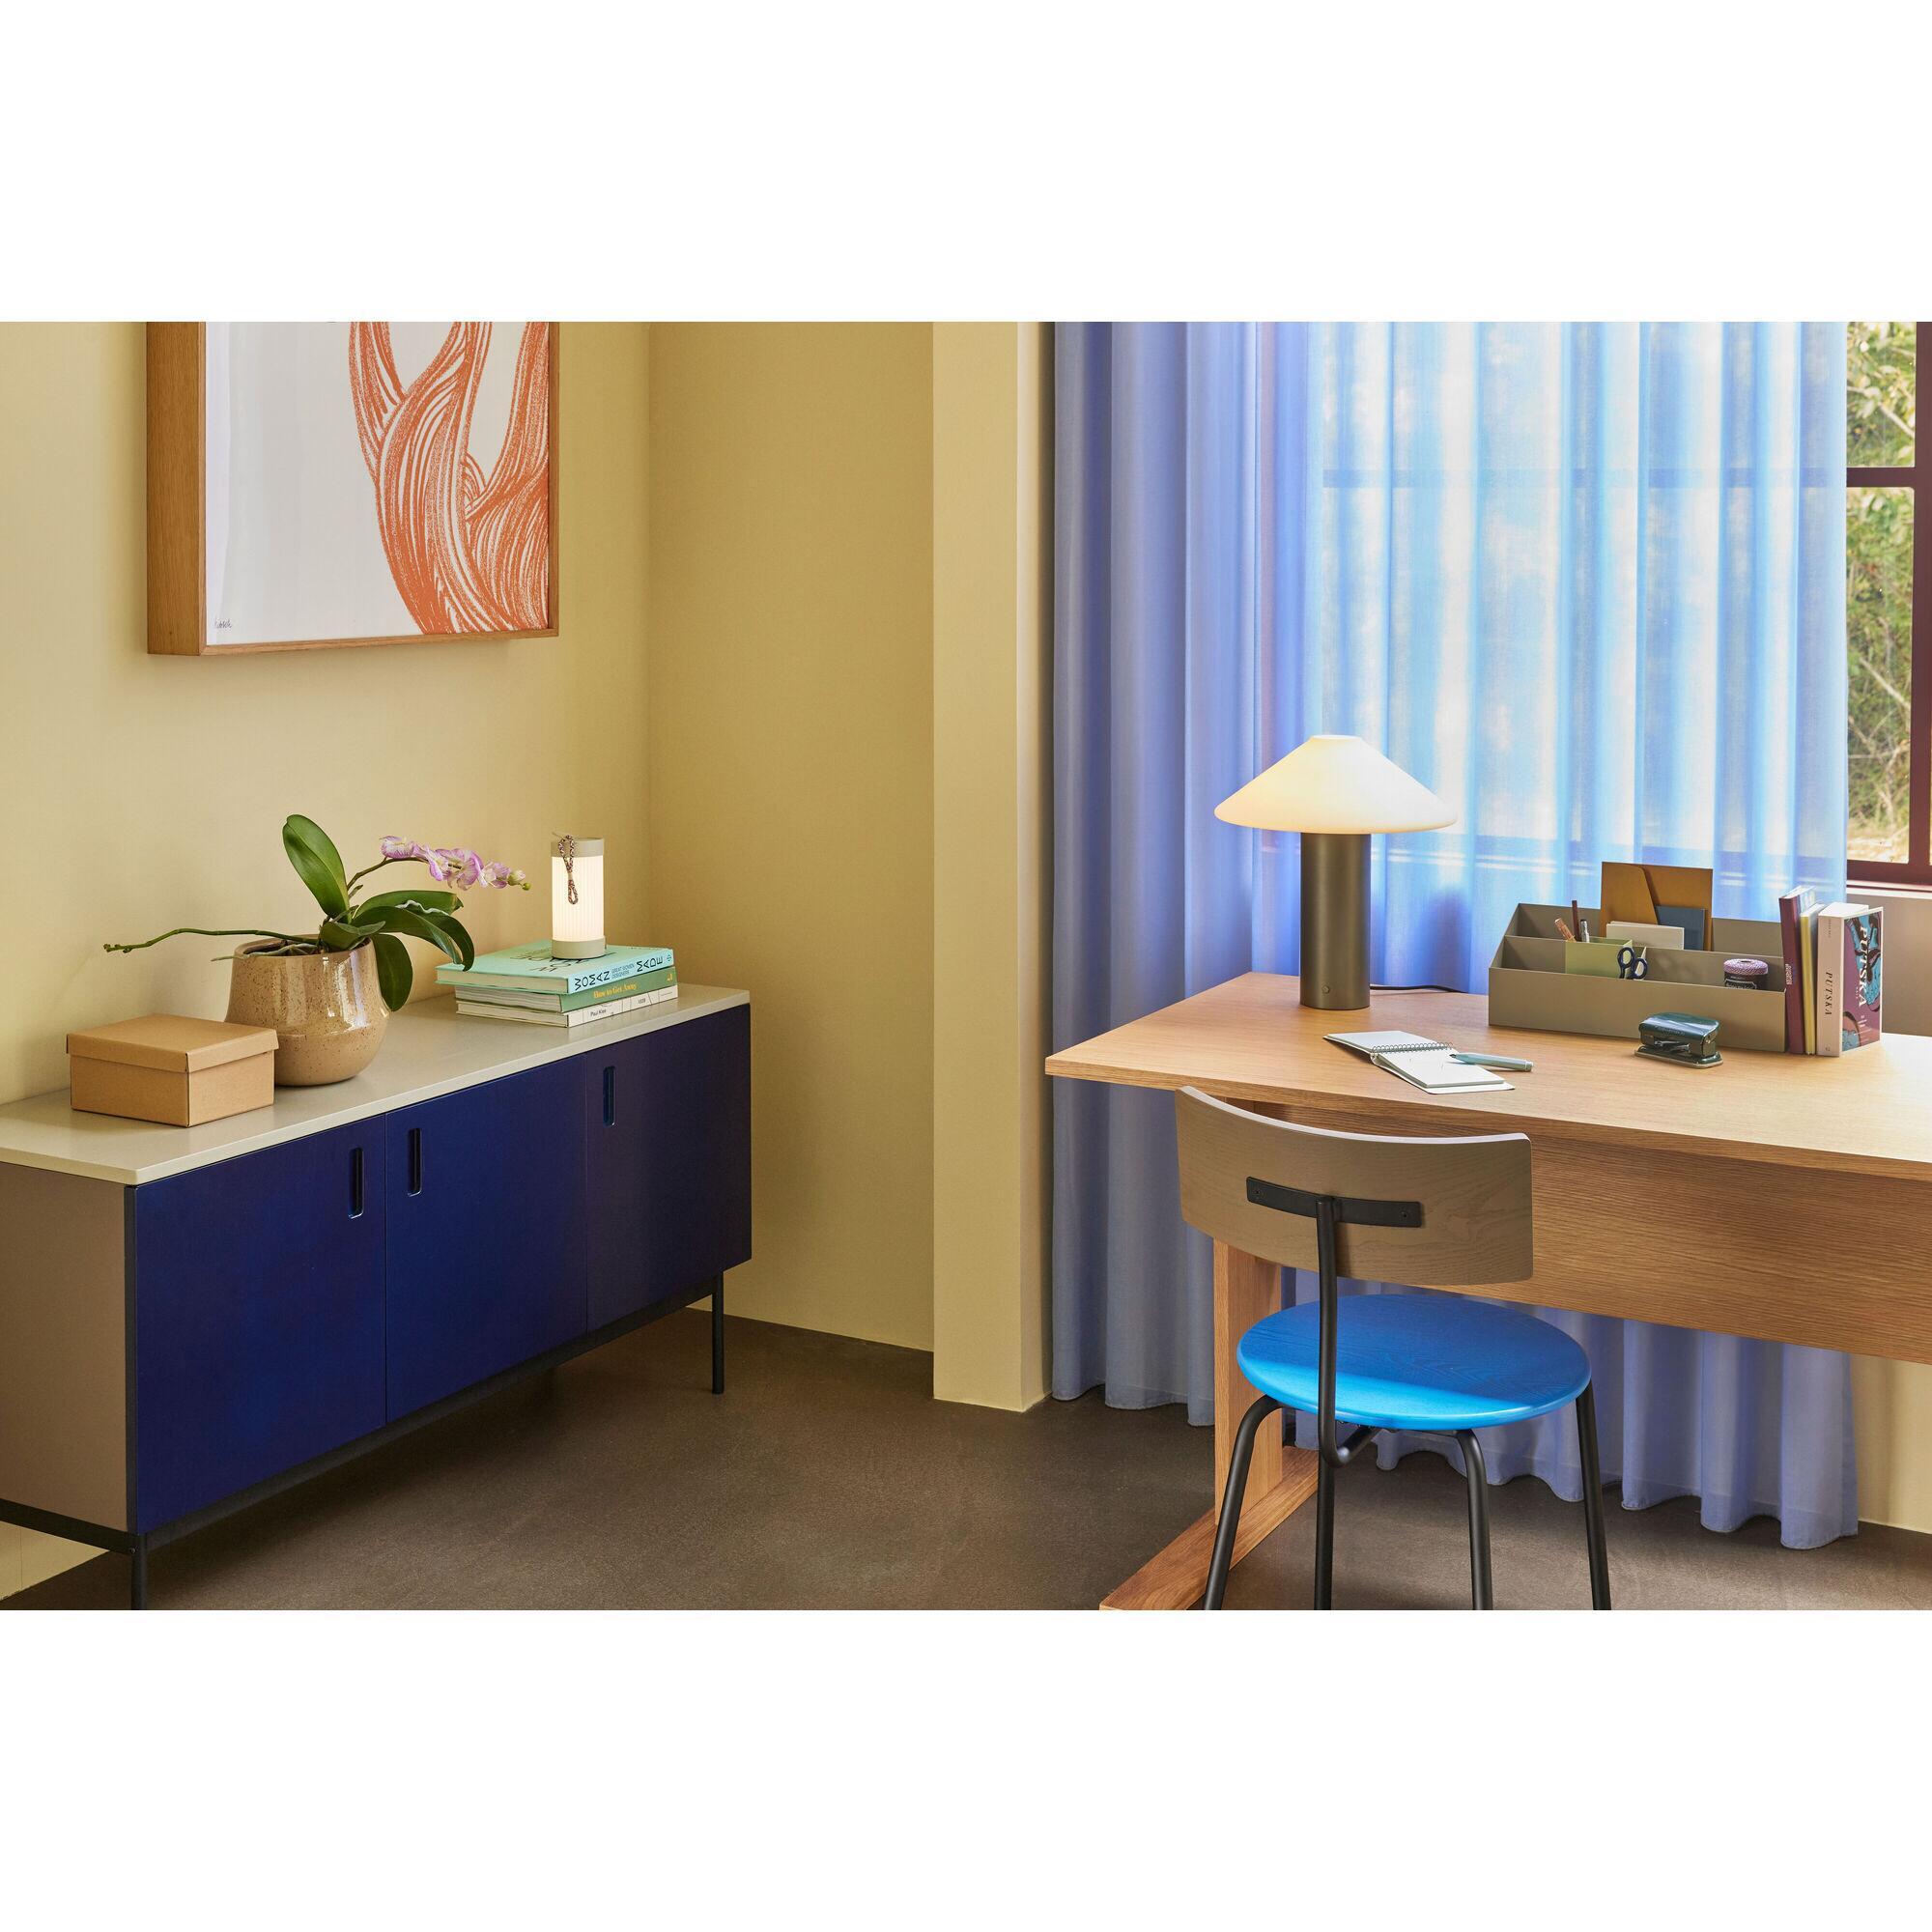  Study Konsolbord - Sort, Mørkeblå, Grå fra Hübsch Interiør i Ask, Stål (Varenr: 021930)